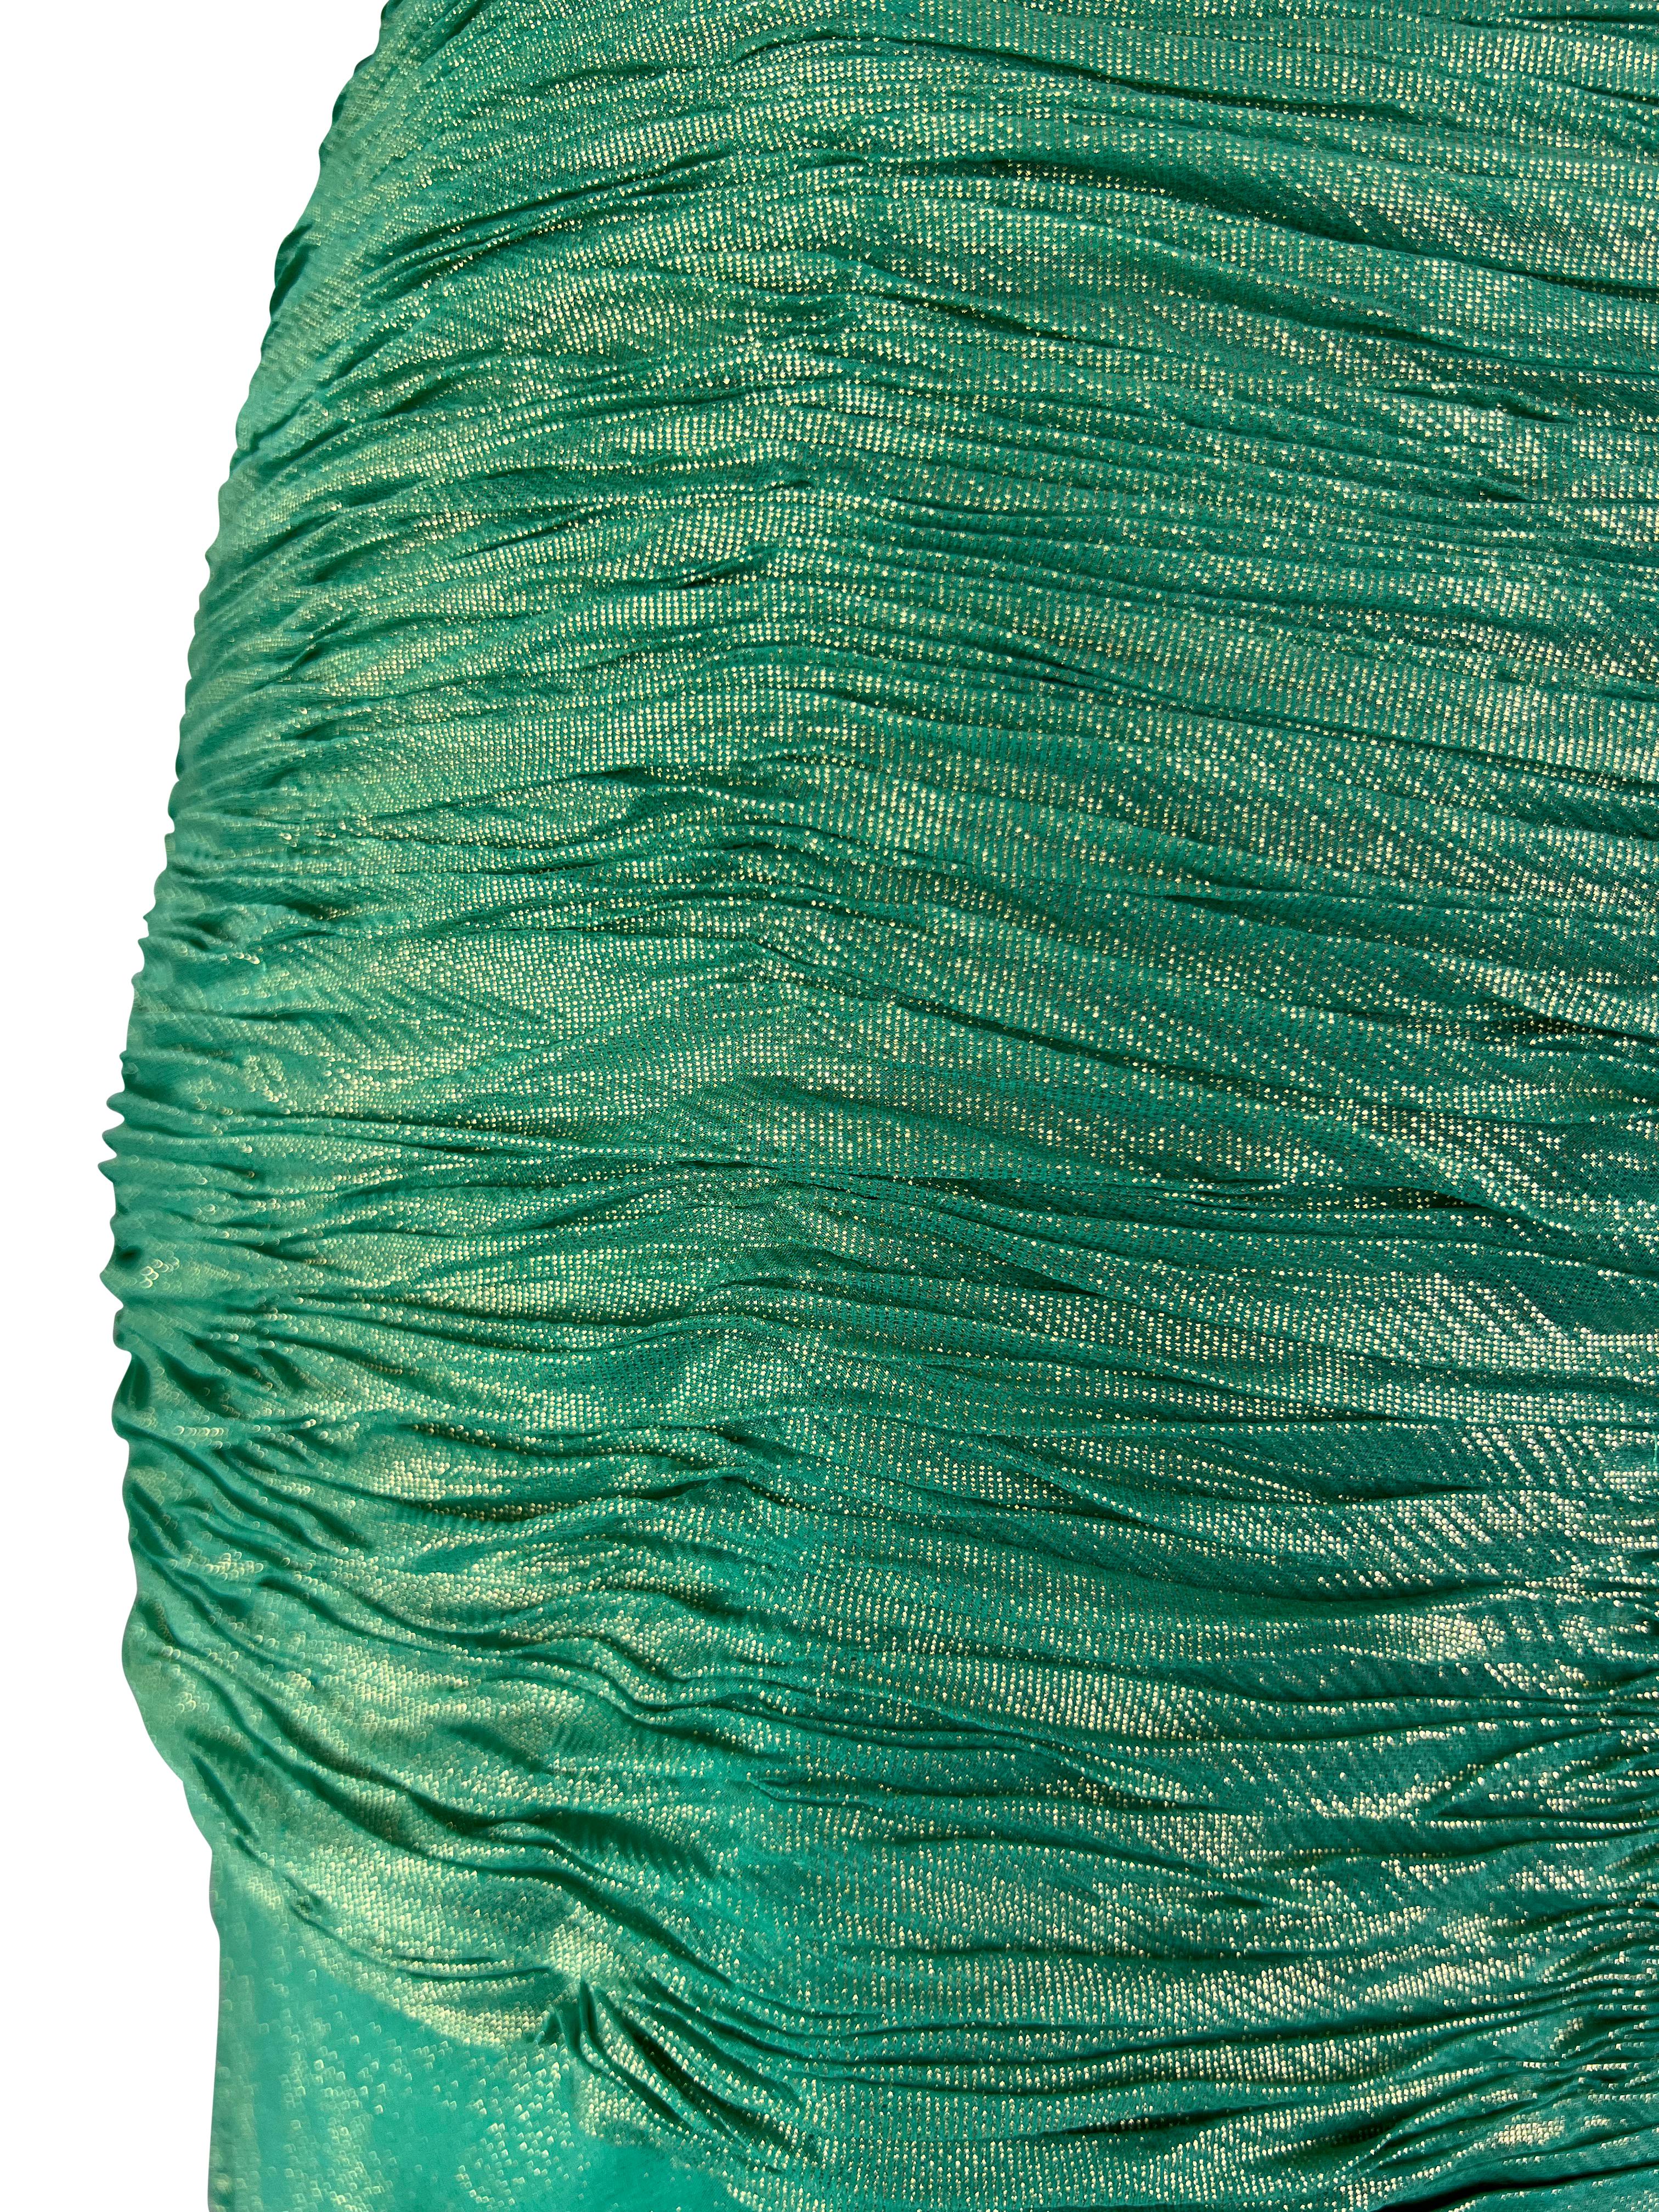 S/S 2004 Atelier Versace by Donatella Metallic Green Halterneck Runway Gown  For Sale 6